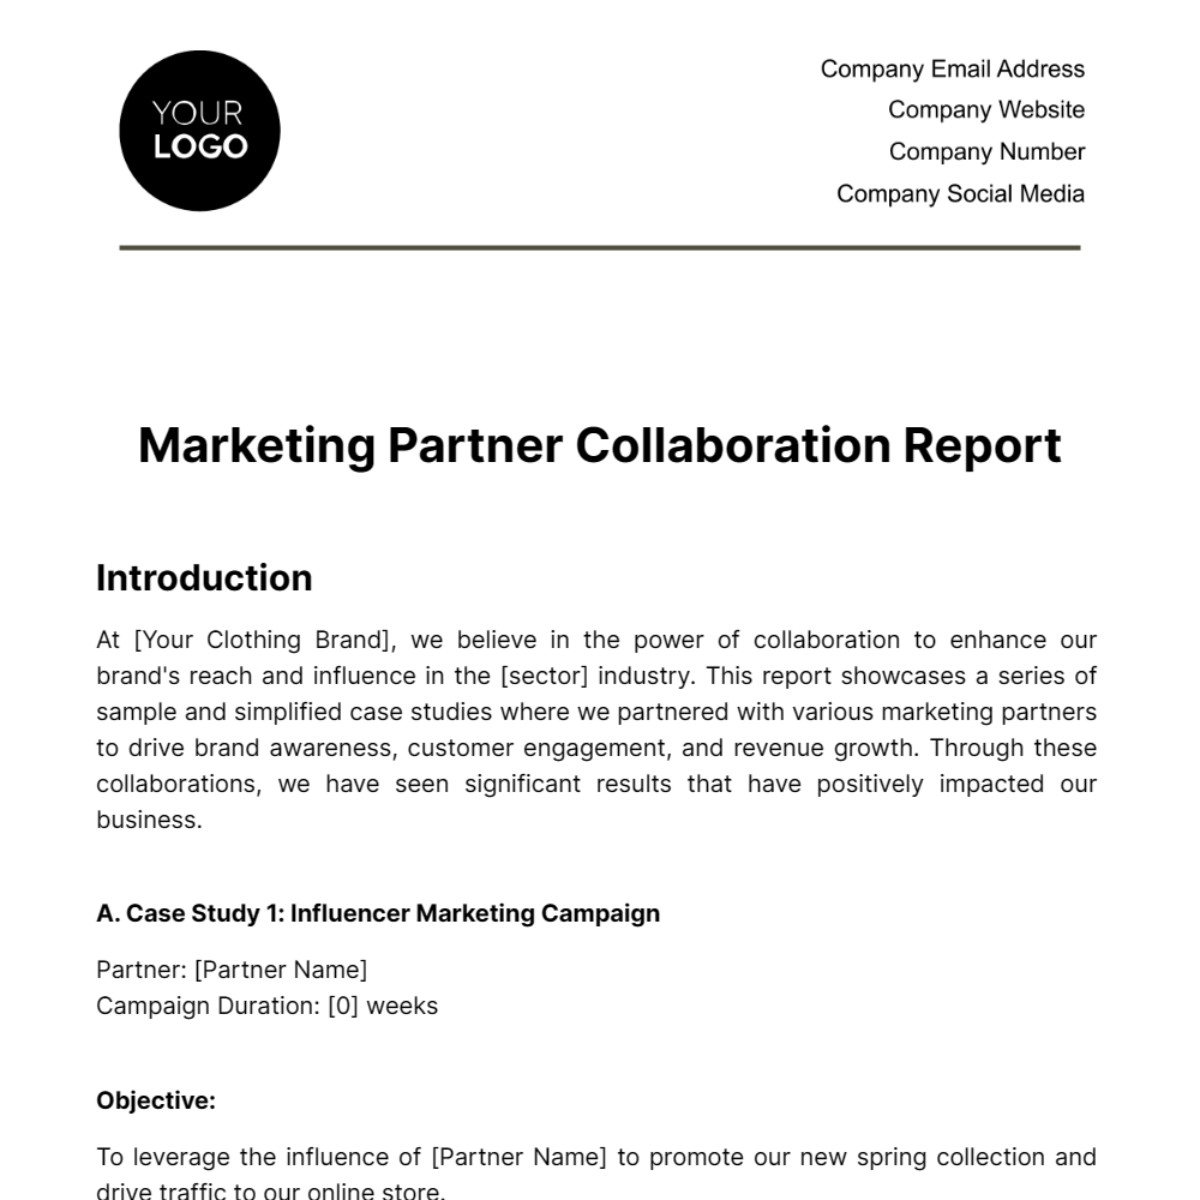 Marketing Partner Collaboration Report Template